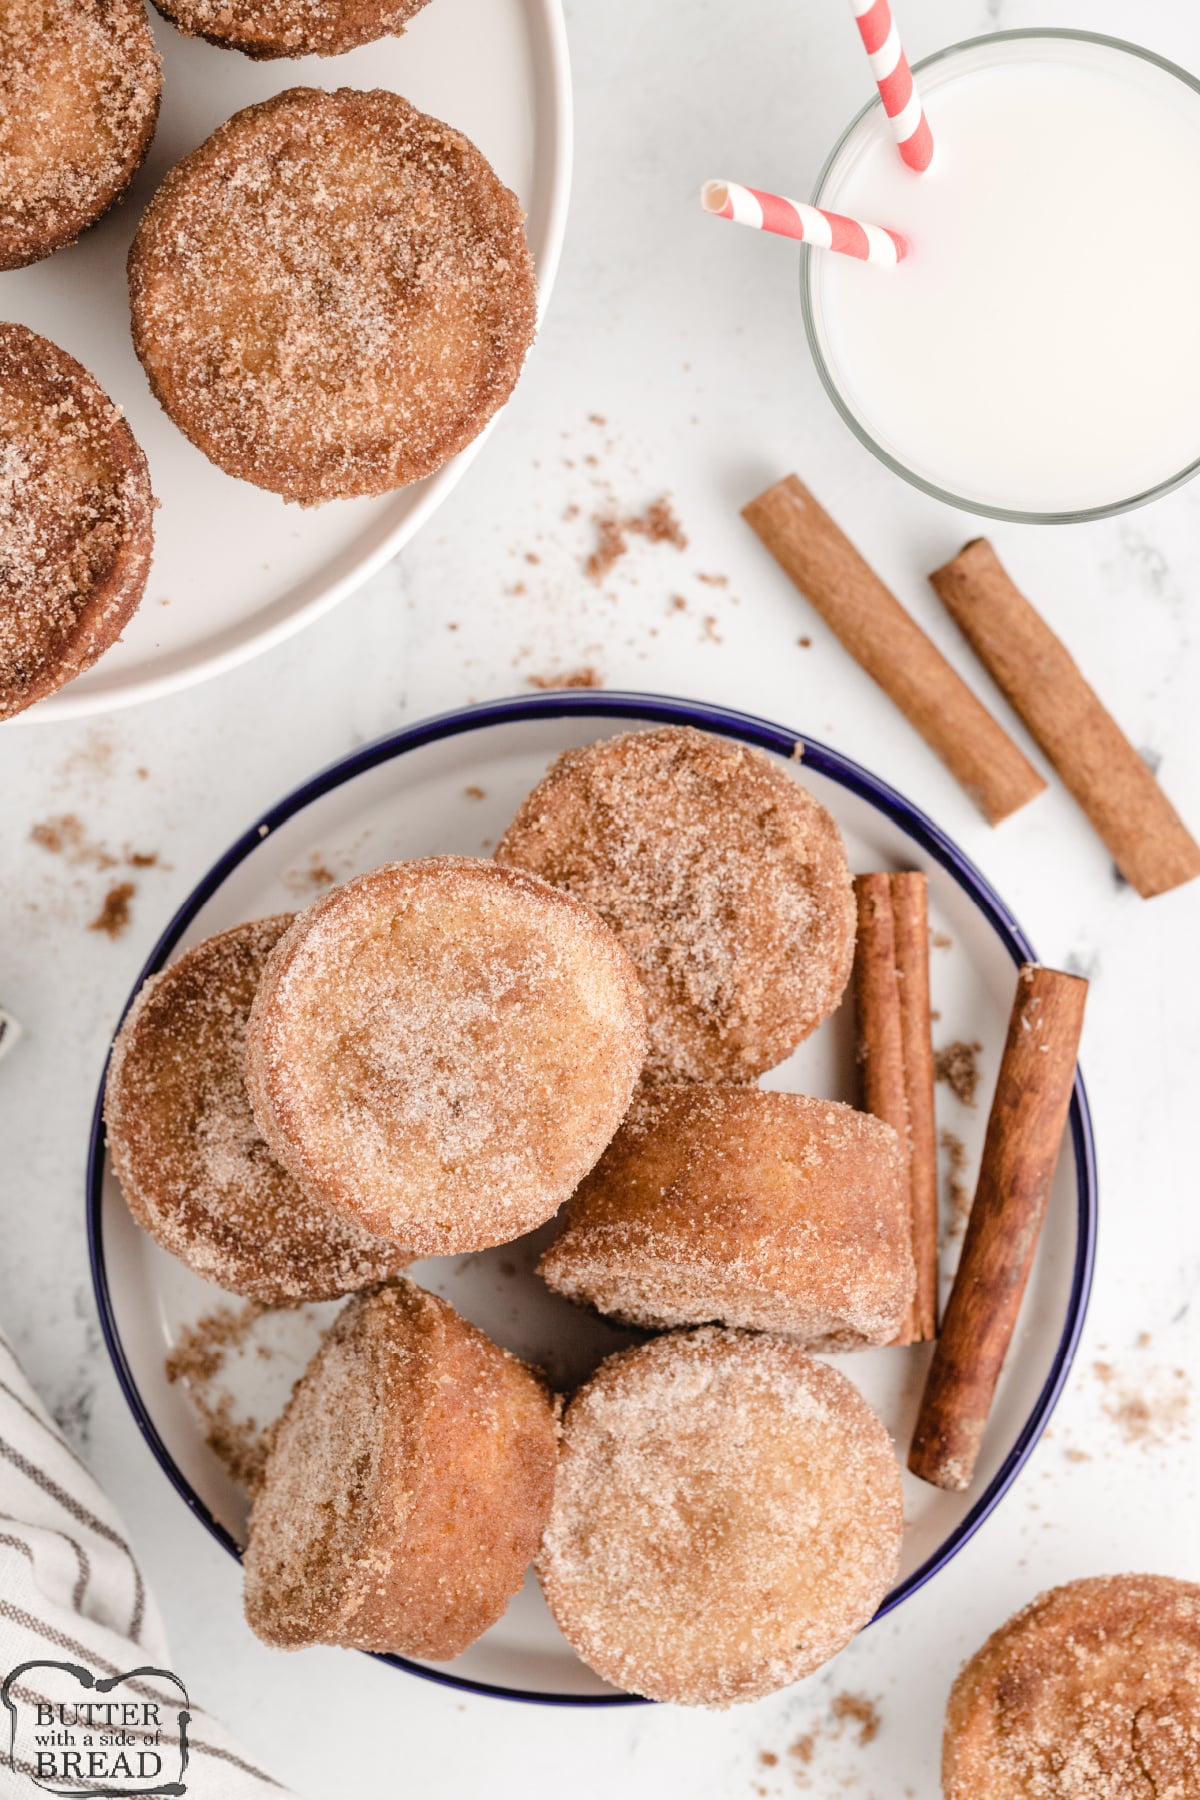 Cinnamon Sugar muffins